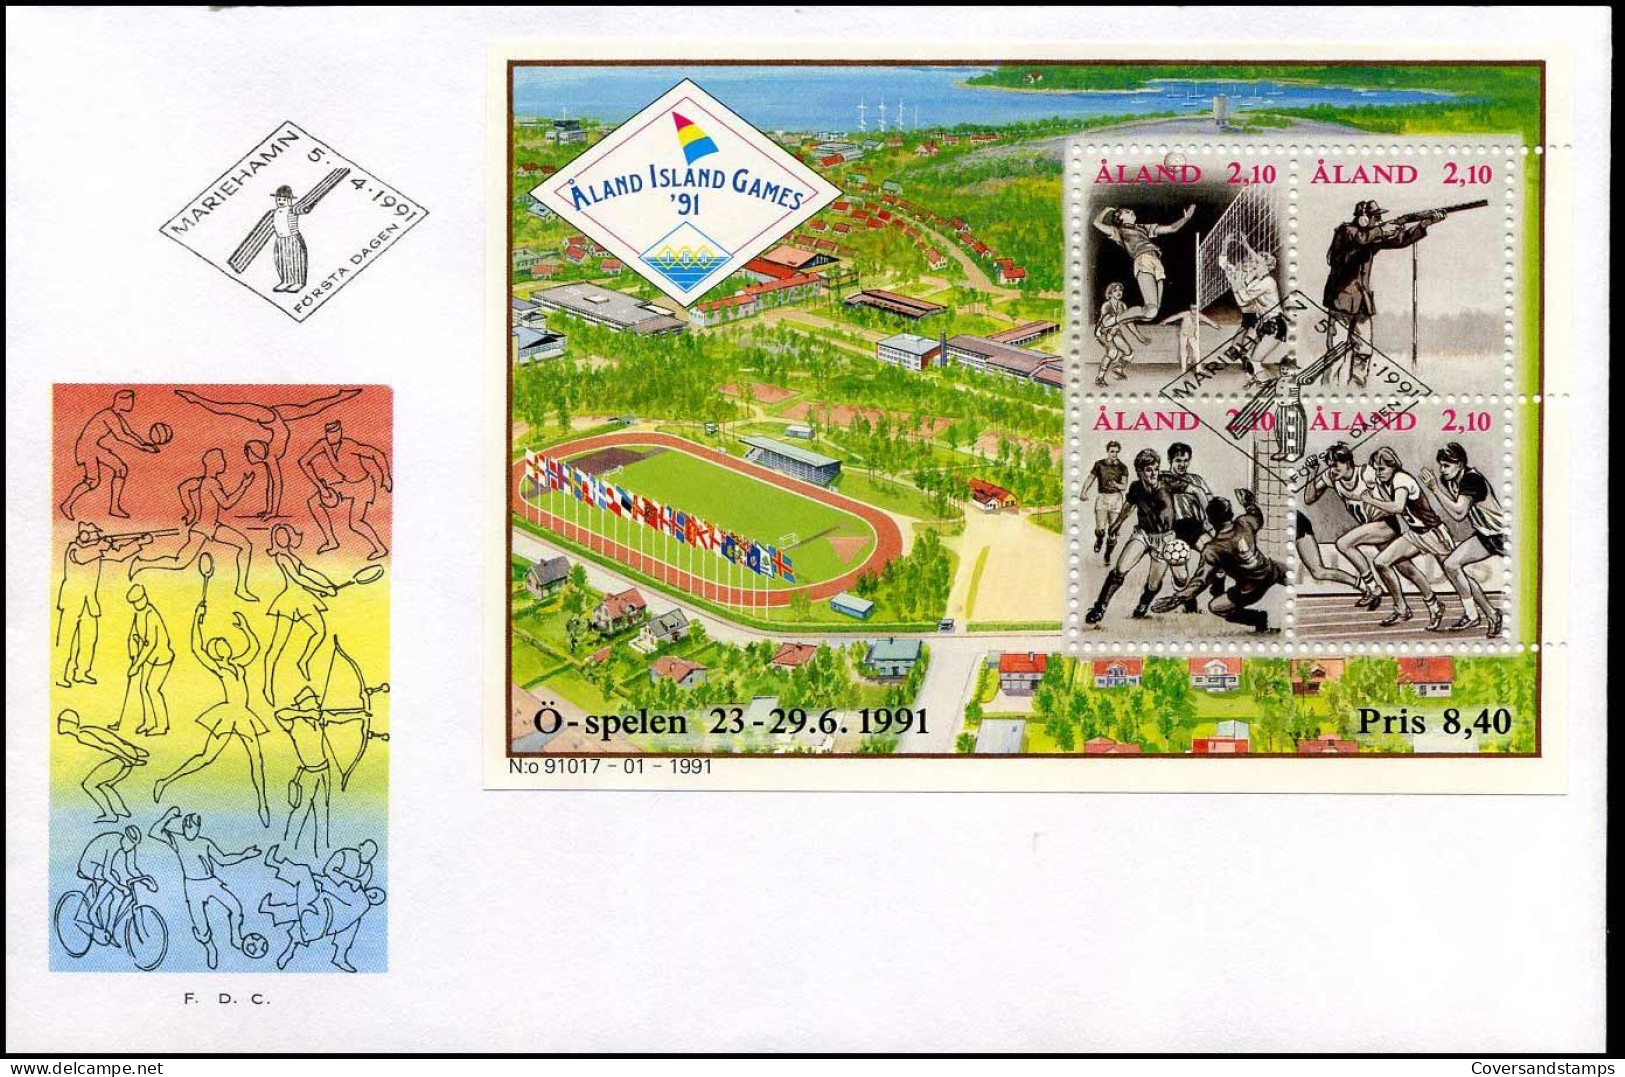 FDC - Aland - Aland Island Games '91 - Aland